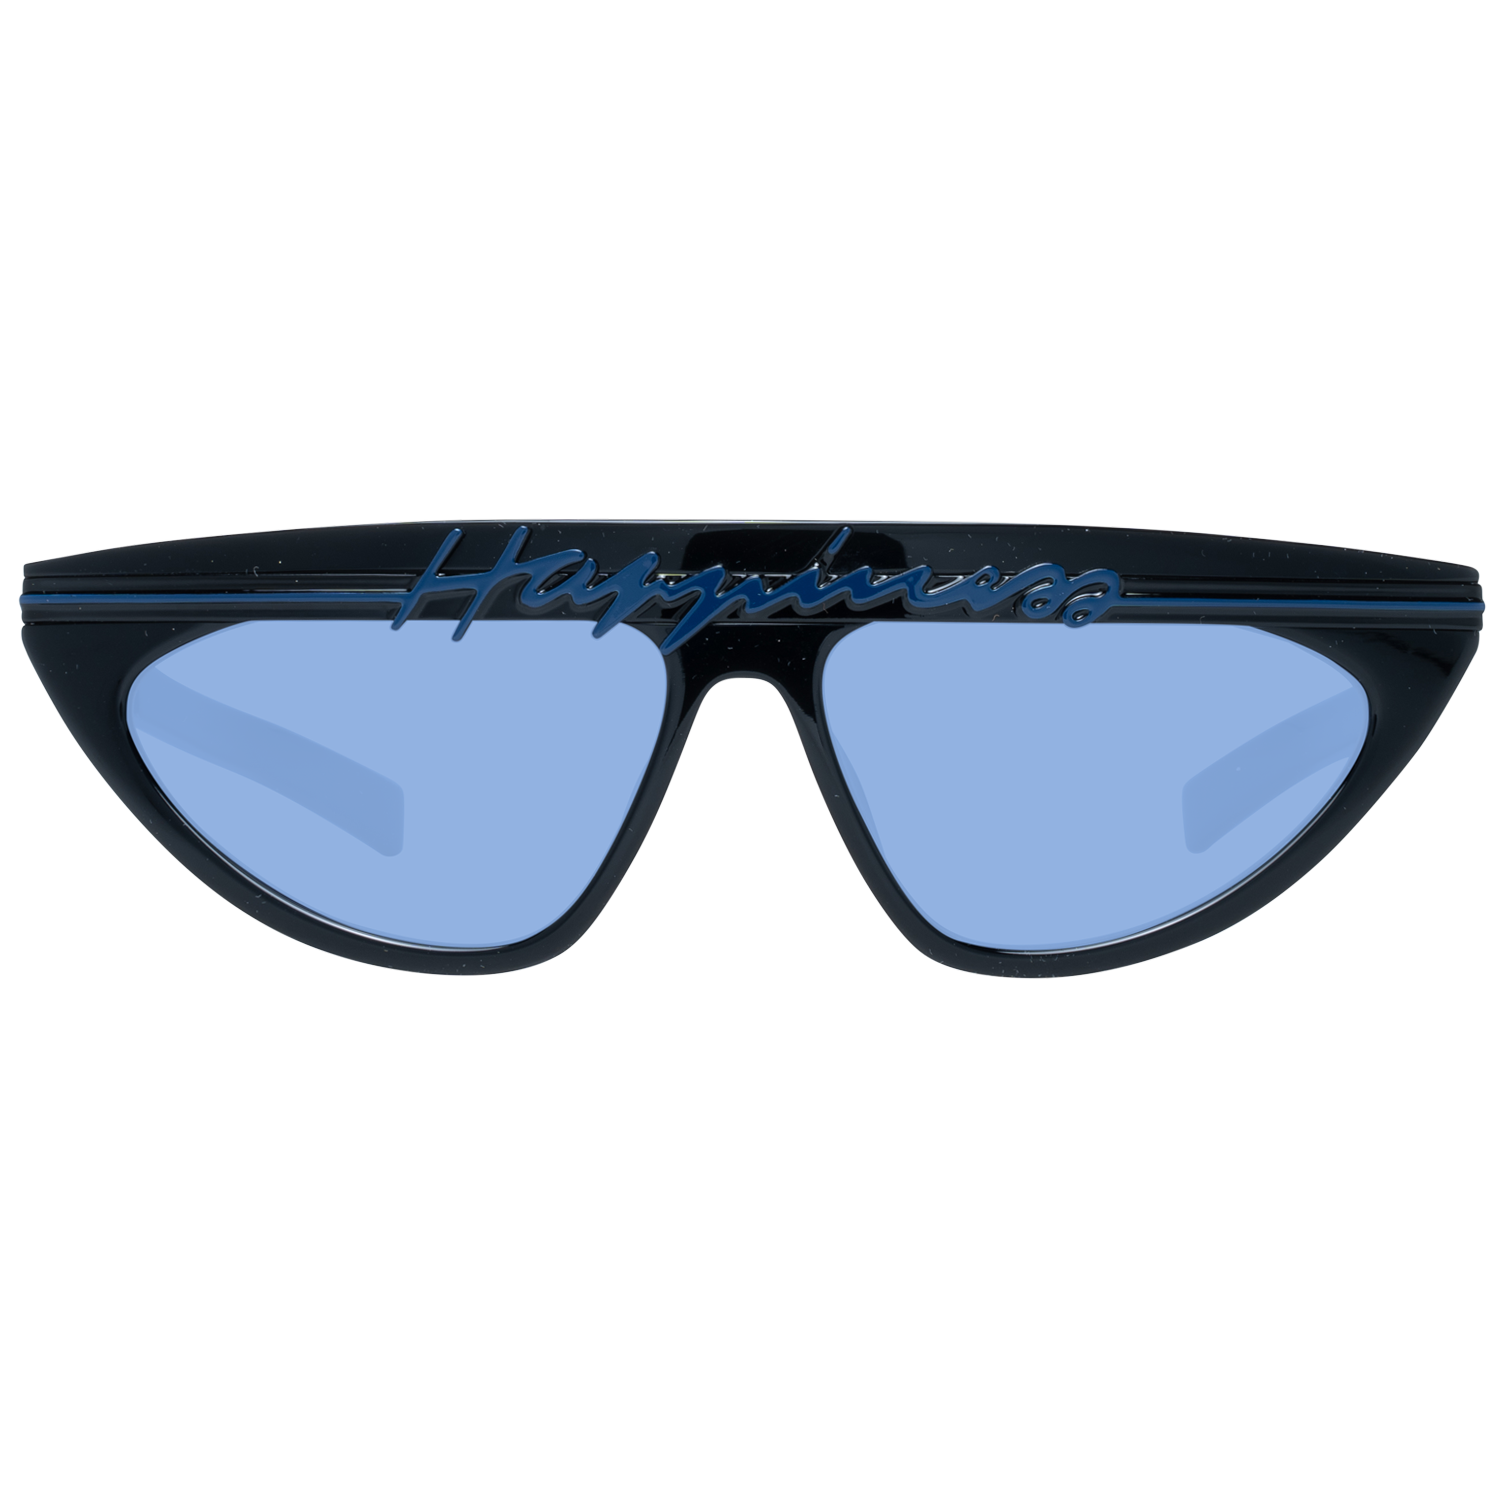 Sting Sunglasses Sting Sunglasses SST367 700K 56 Eyeglasses Eyewear UK USA Australia 